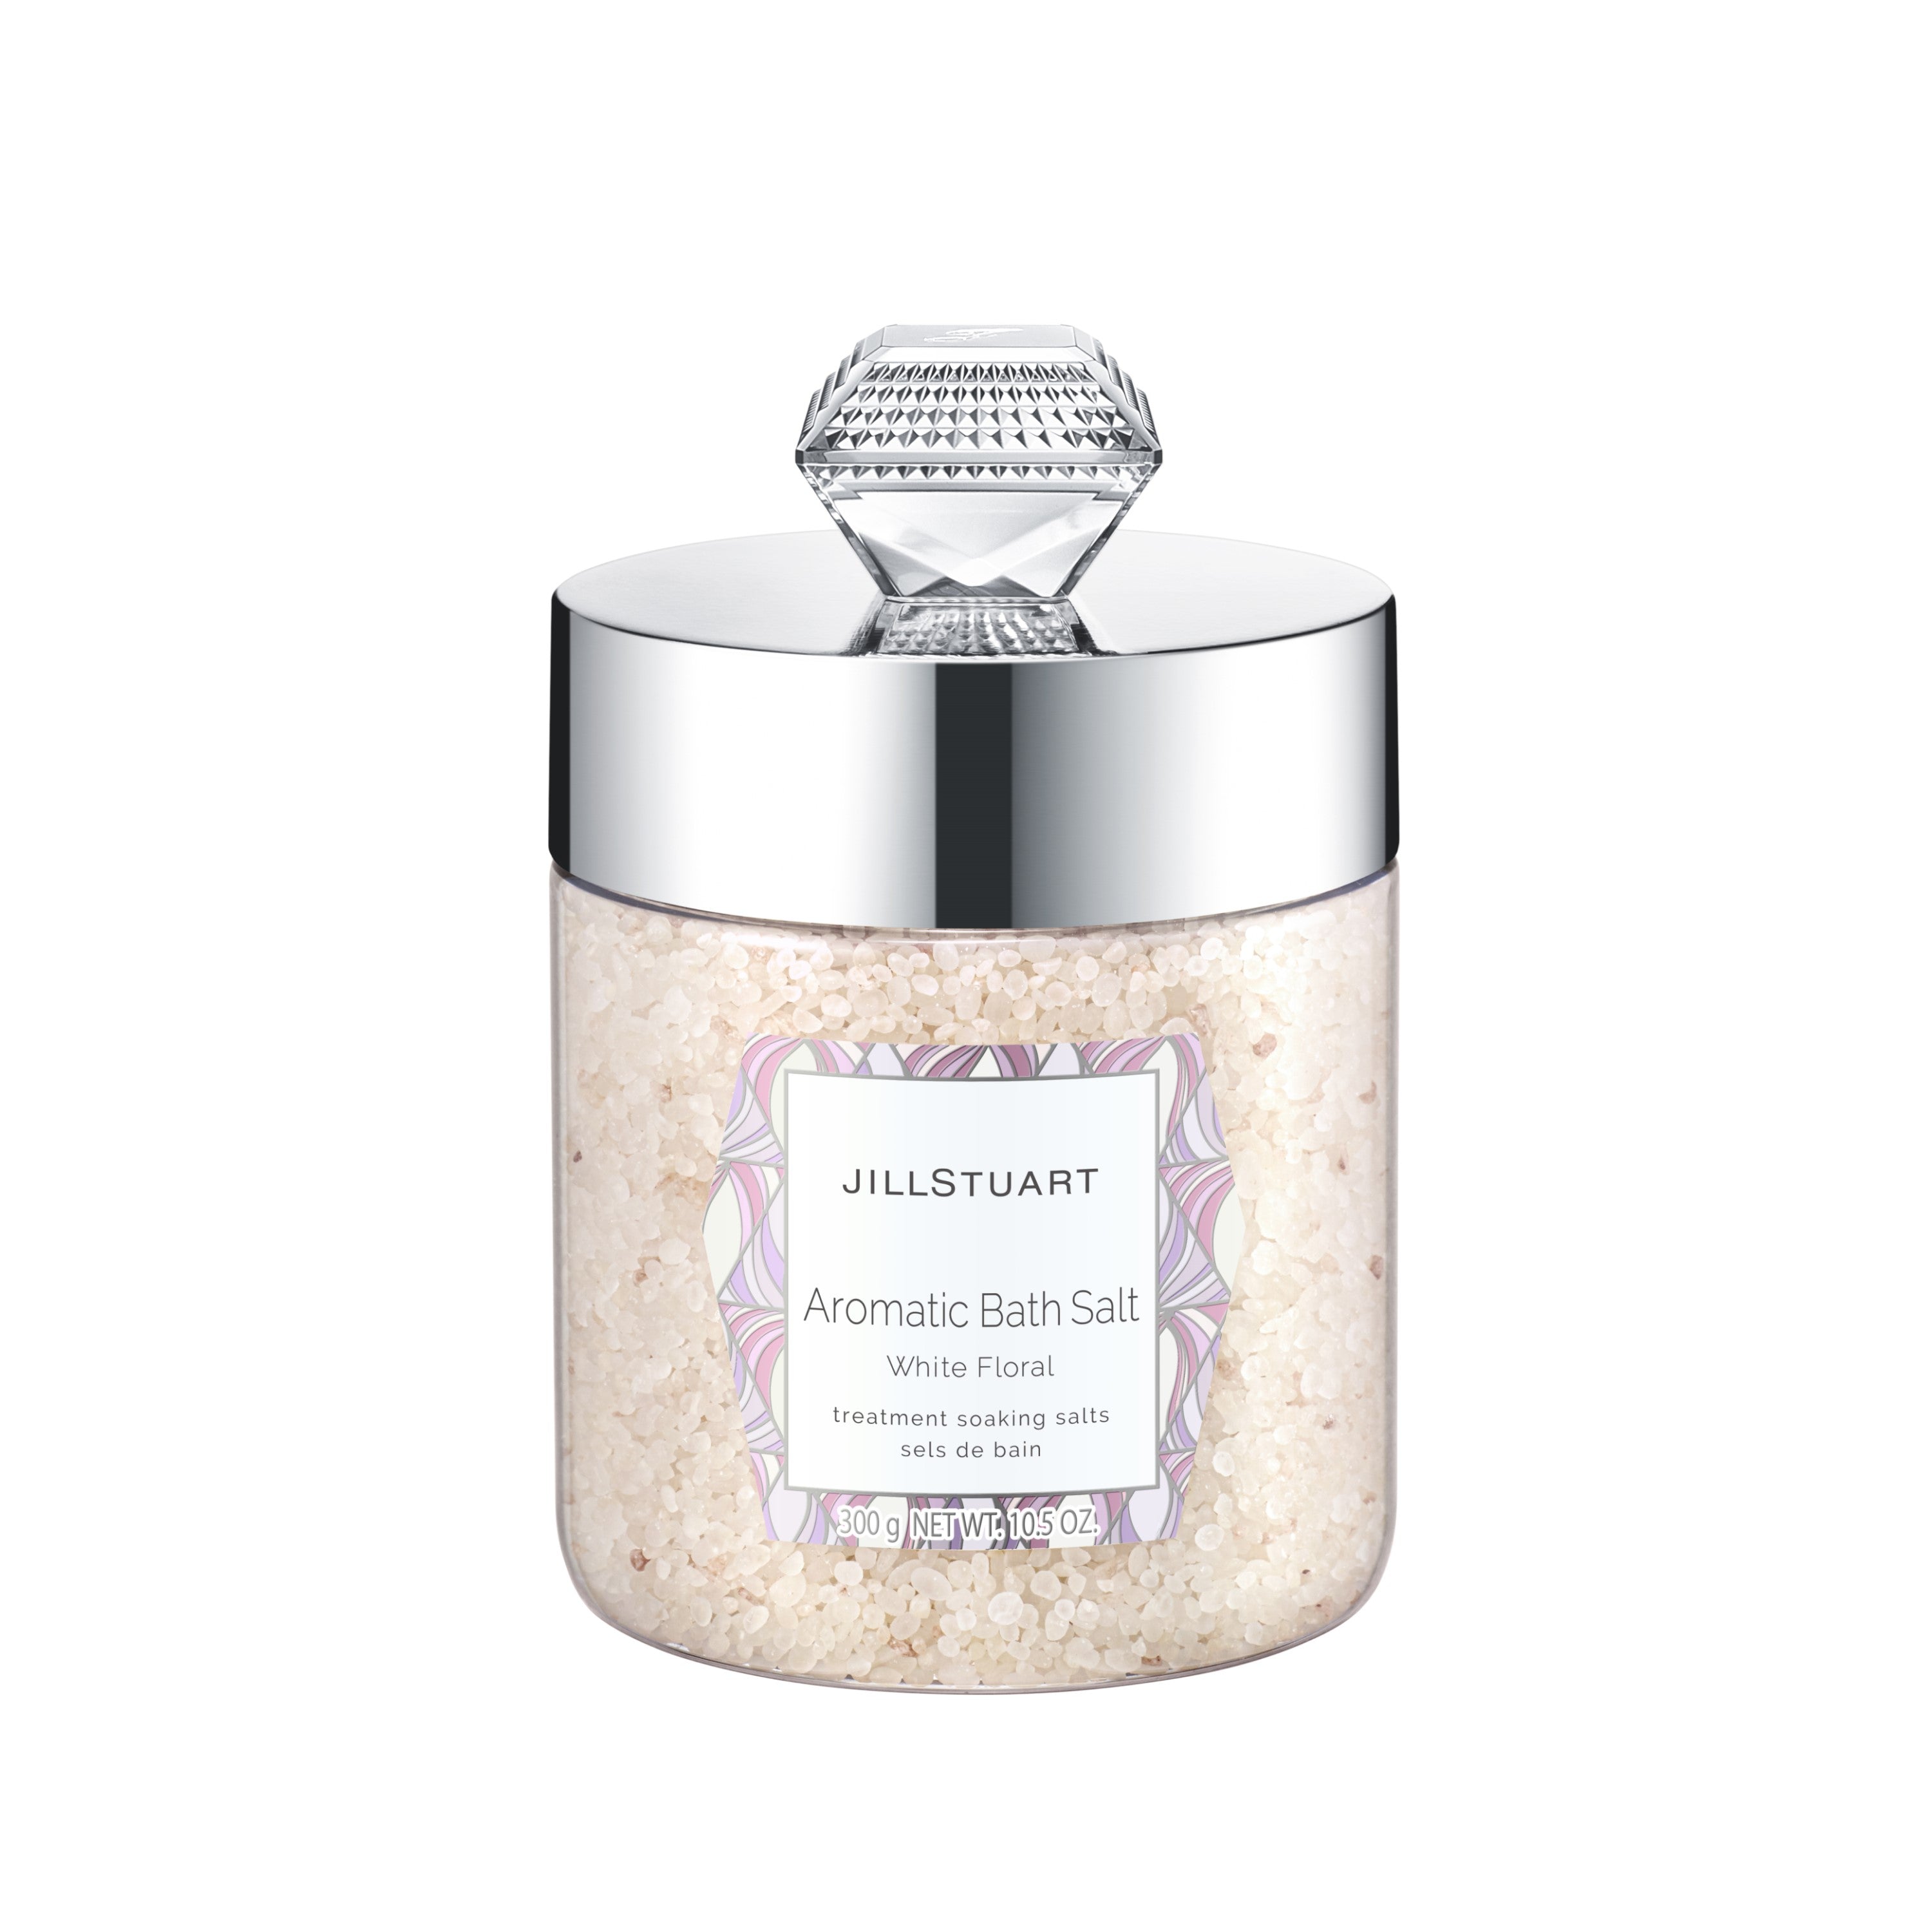 Image of Aromatic Bath Salt